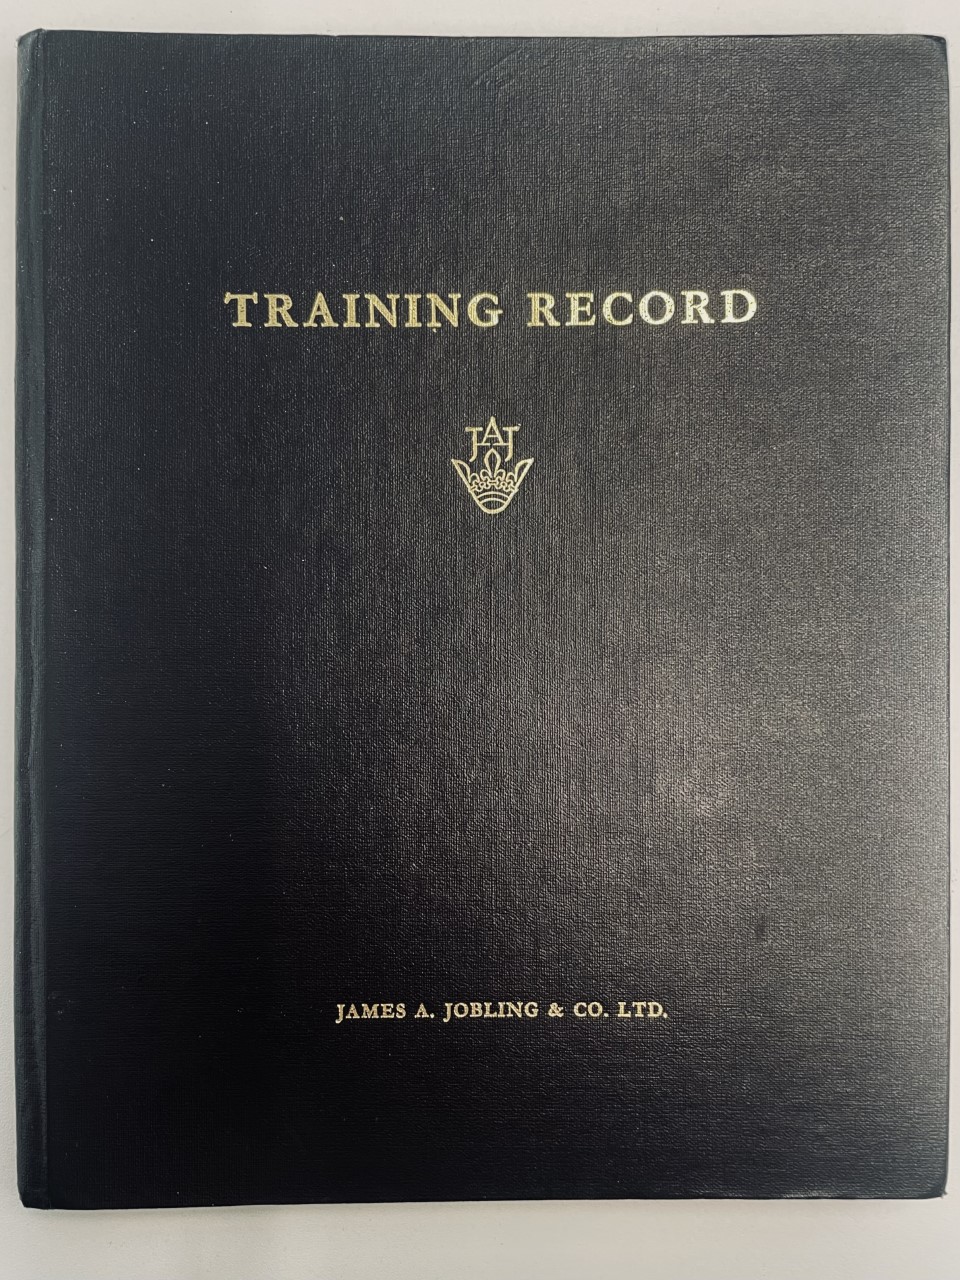 John’s Apprenticeship Record book from Jobling’s factory Logo